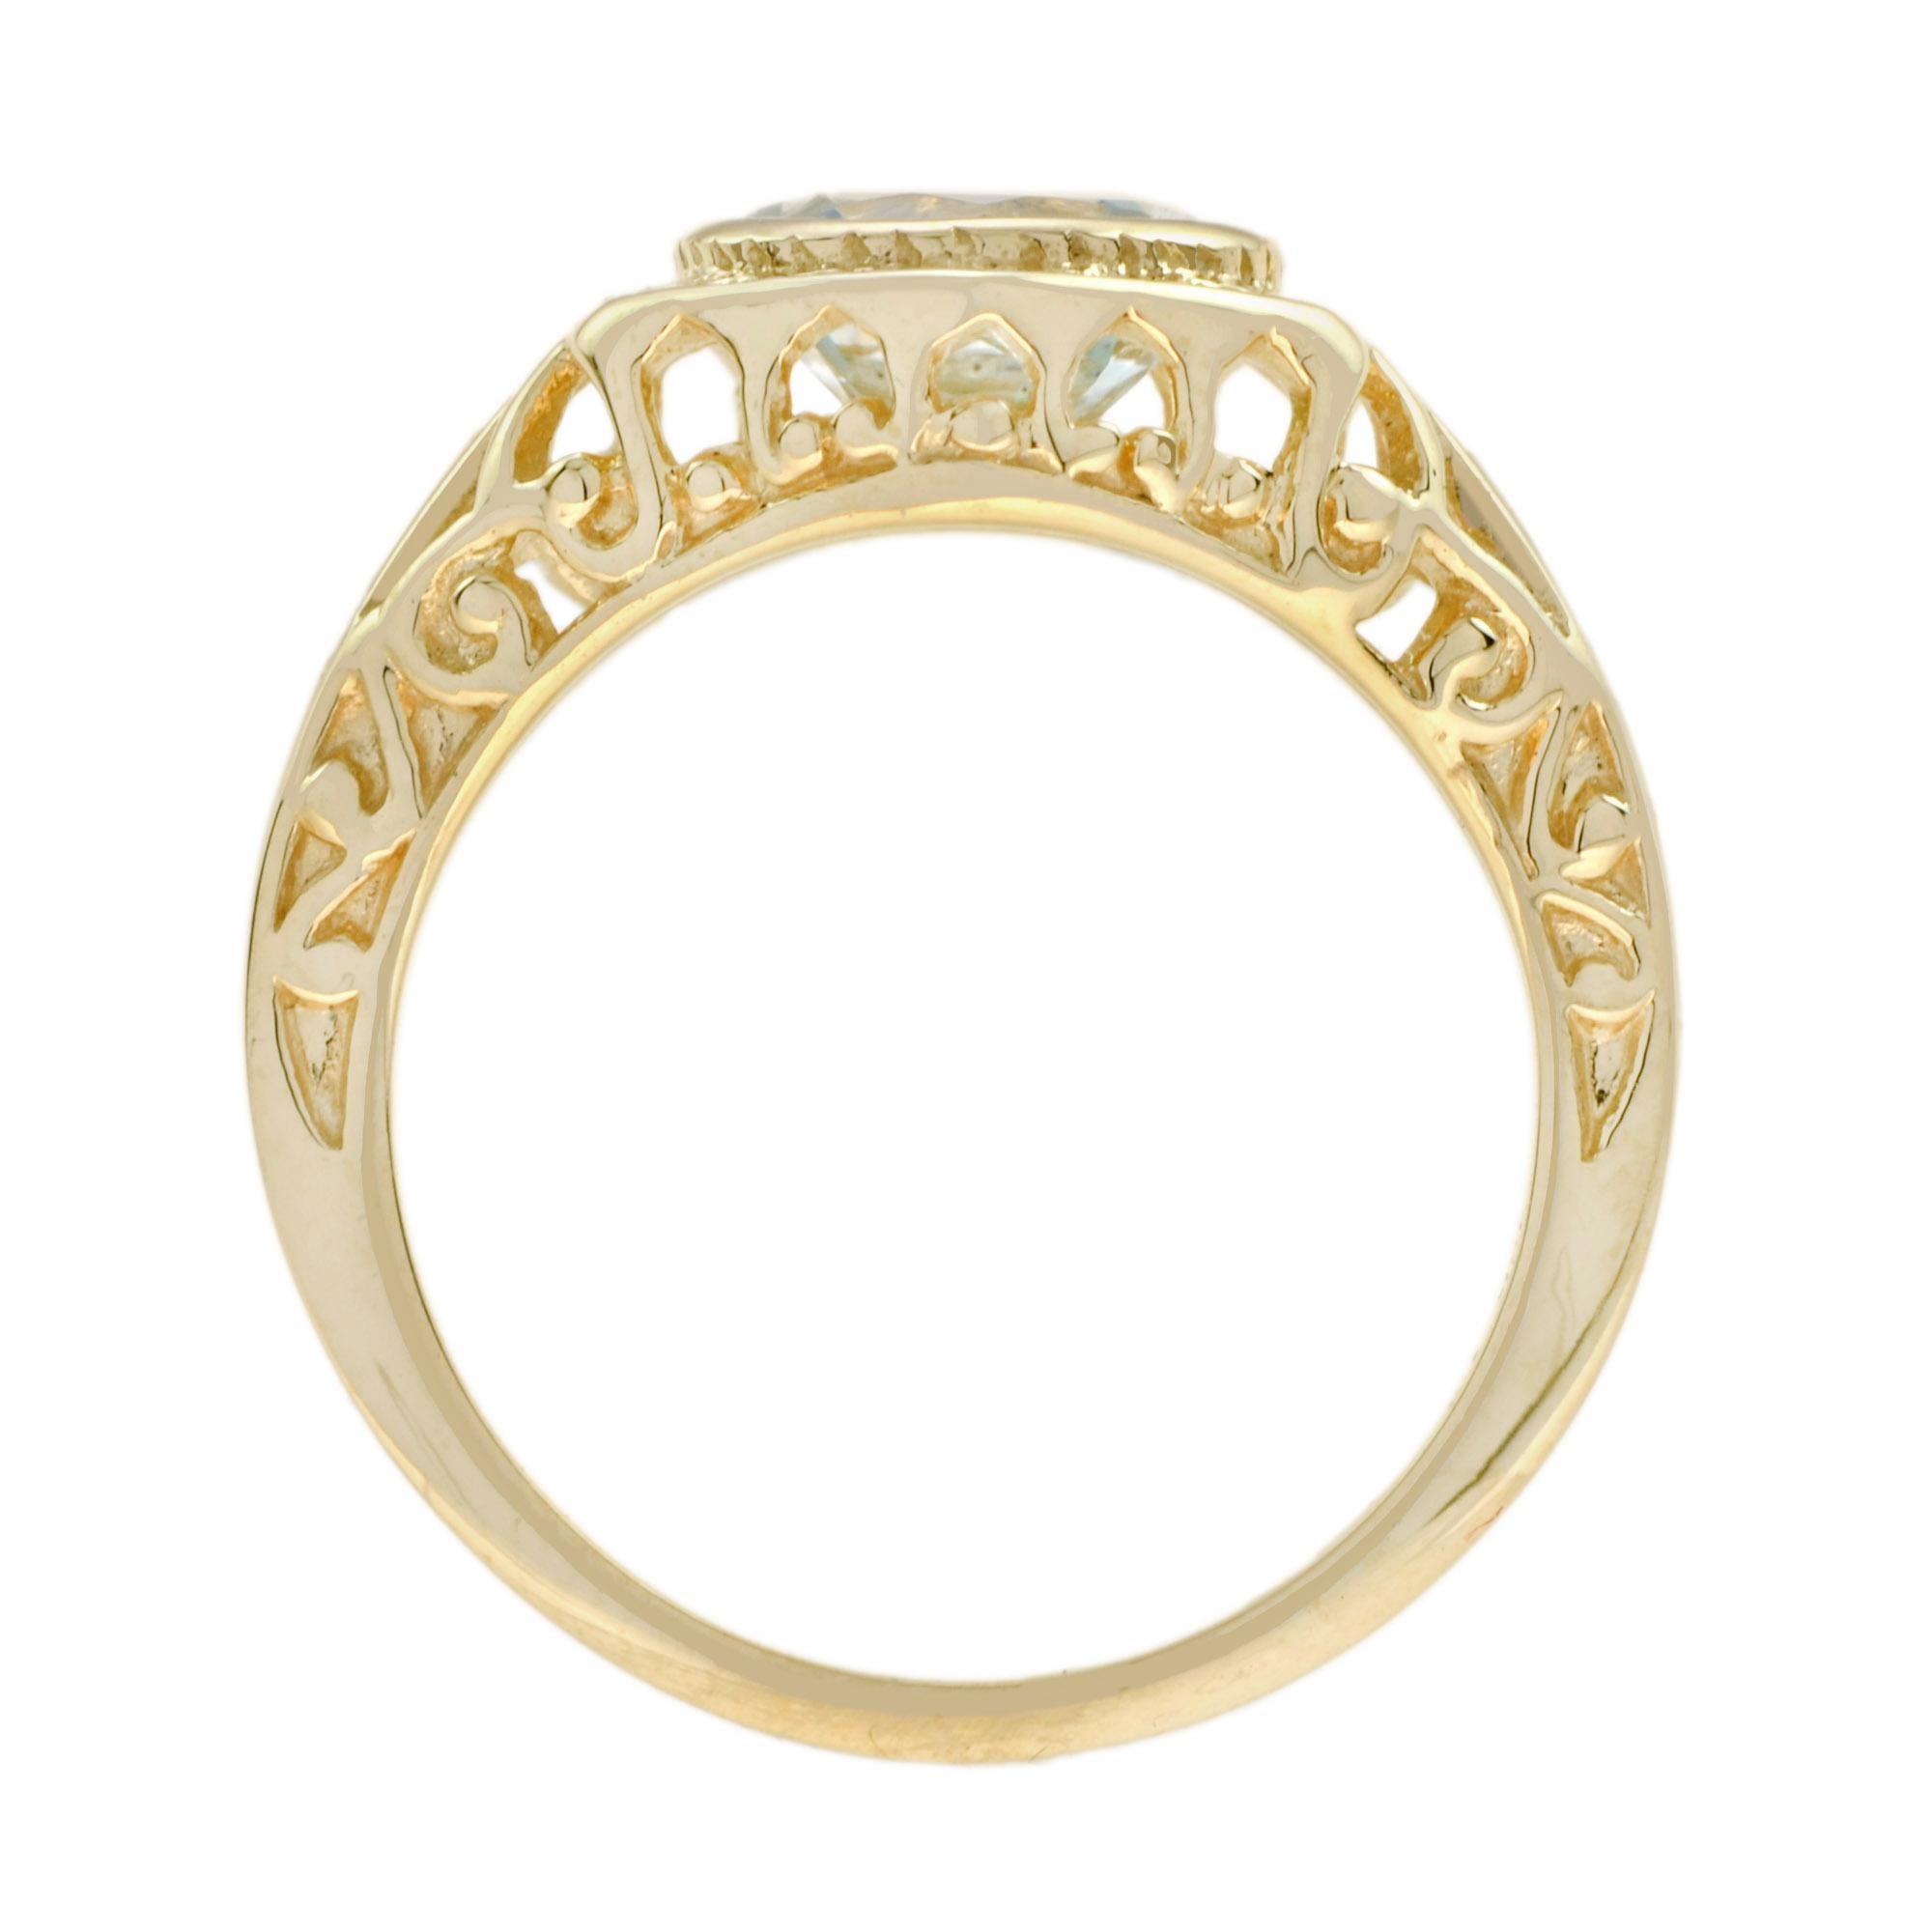 Round Cut Aquamarine Hexagon Shaped Filigree Ring in 18k Yellow Gold